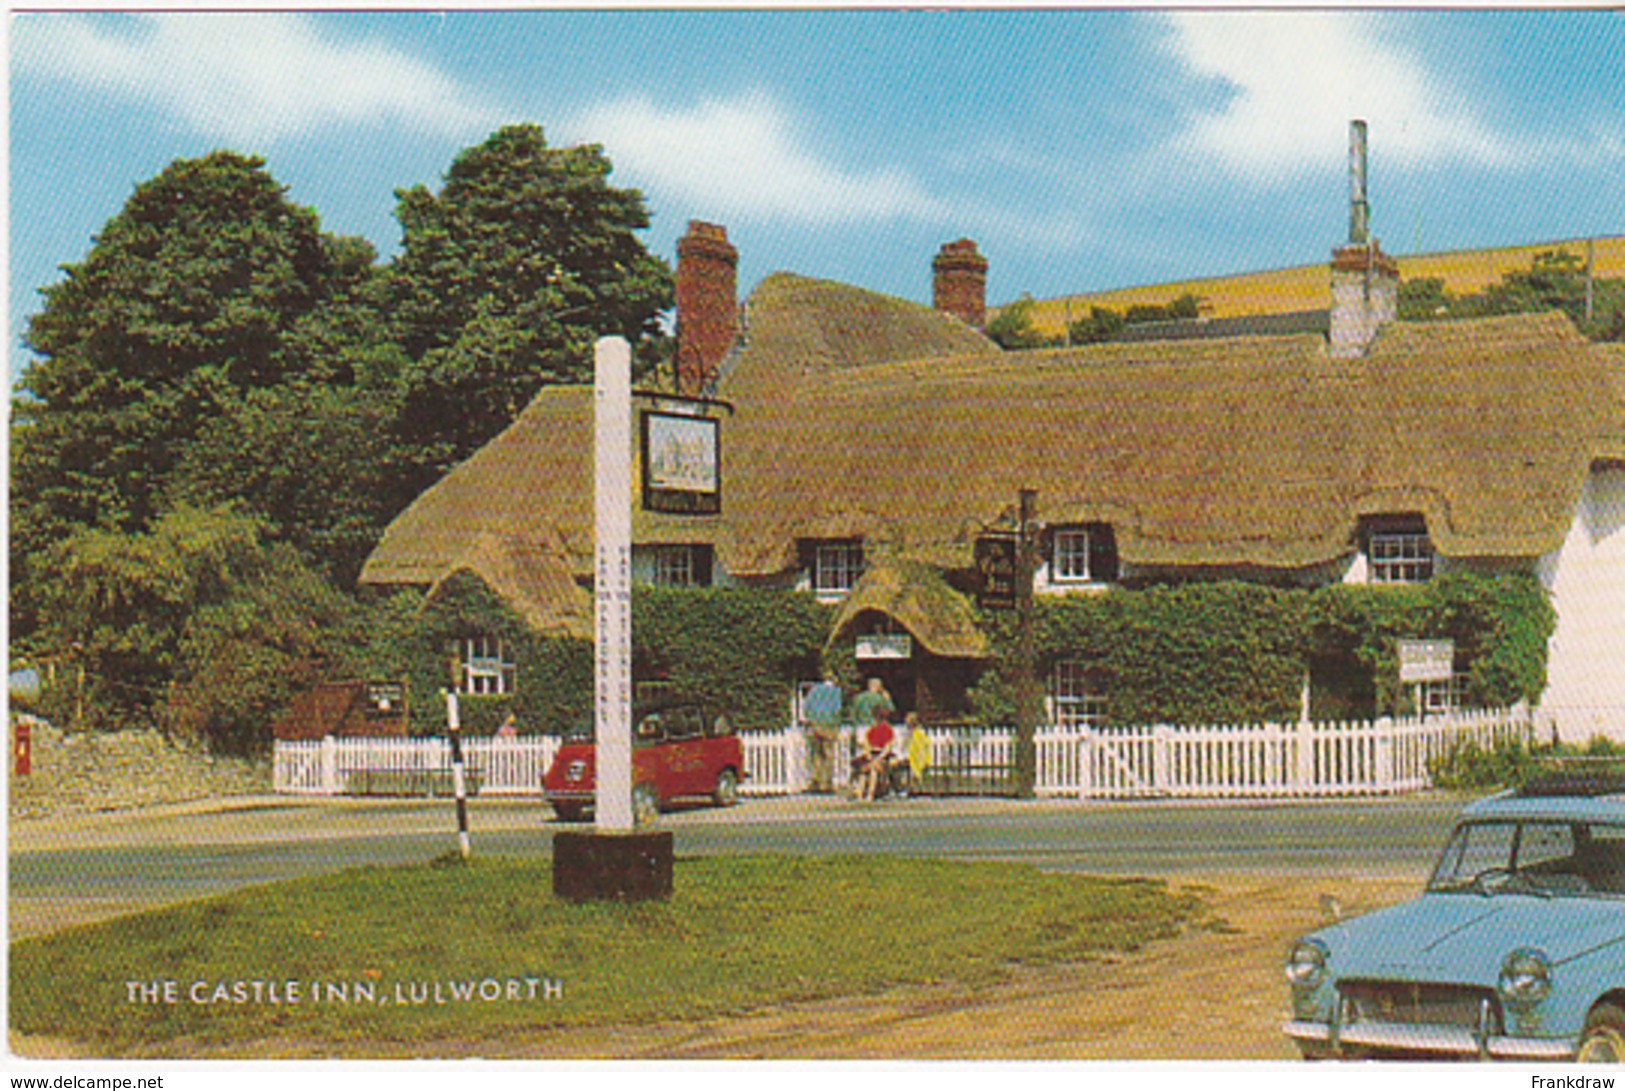 Postcard - The Castle Inn, Lulworth - Card No. 1-54-06-02 - VG - Unclassified